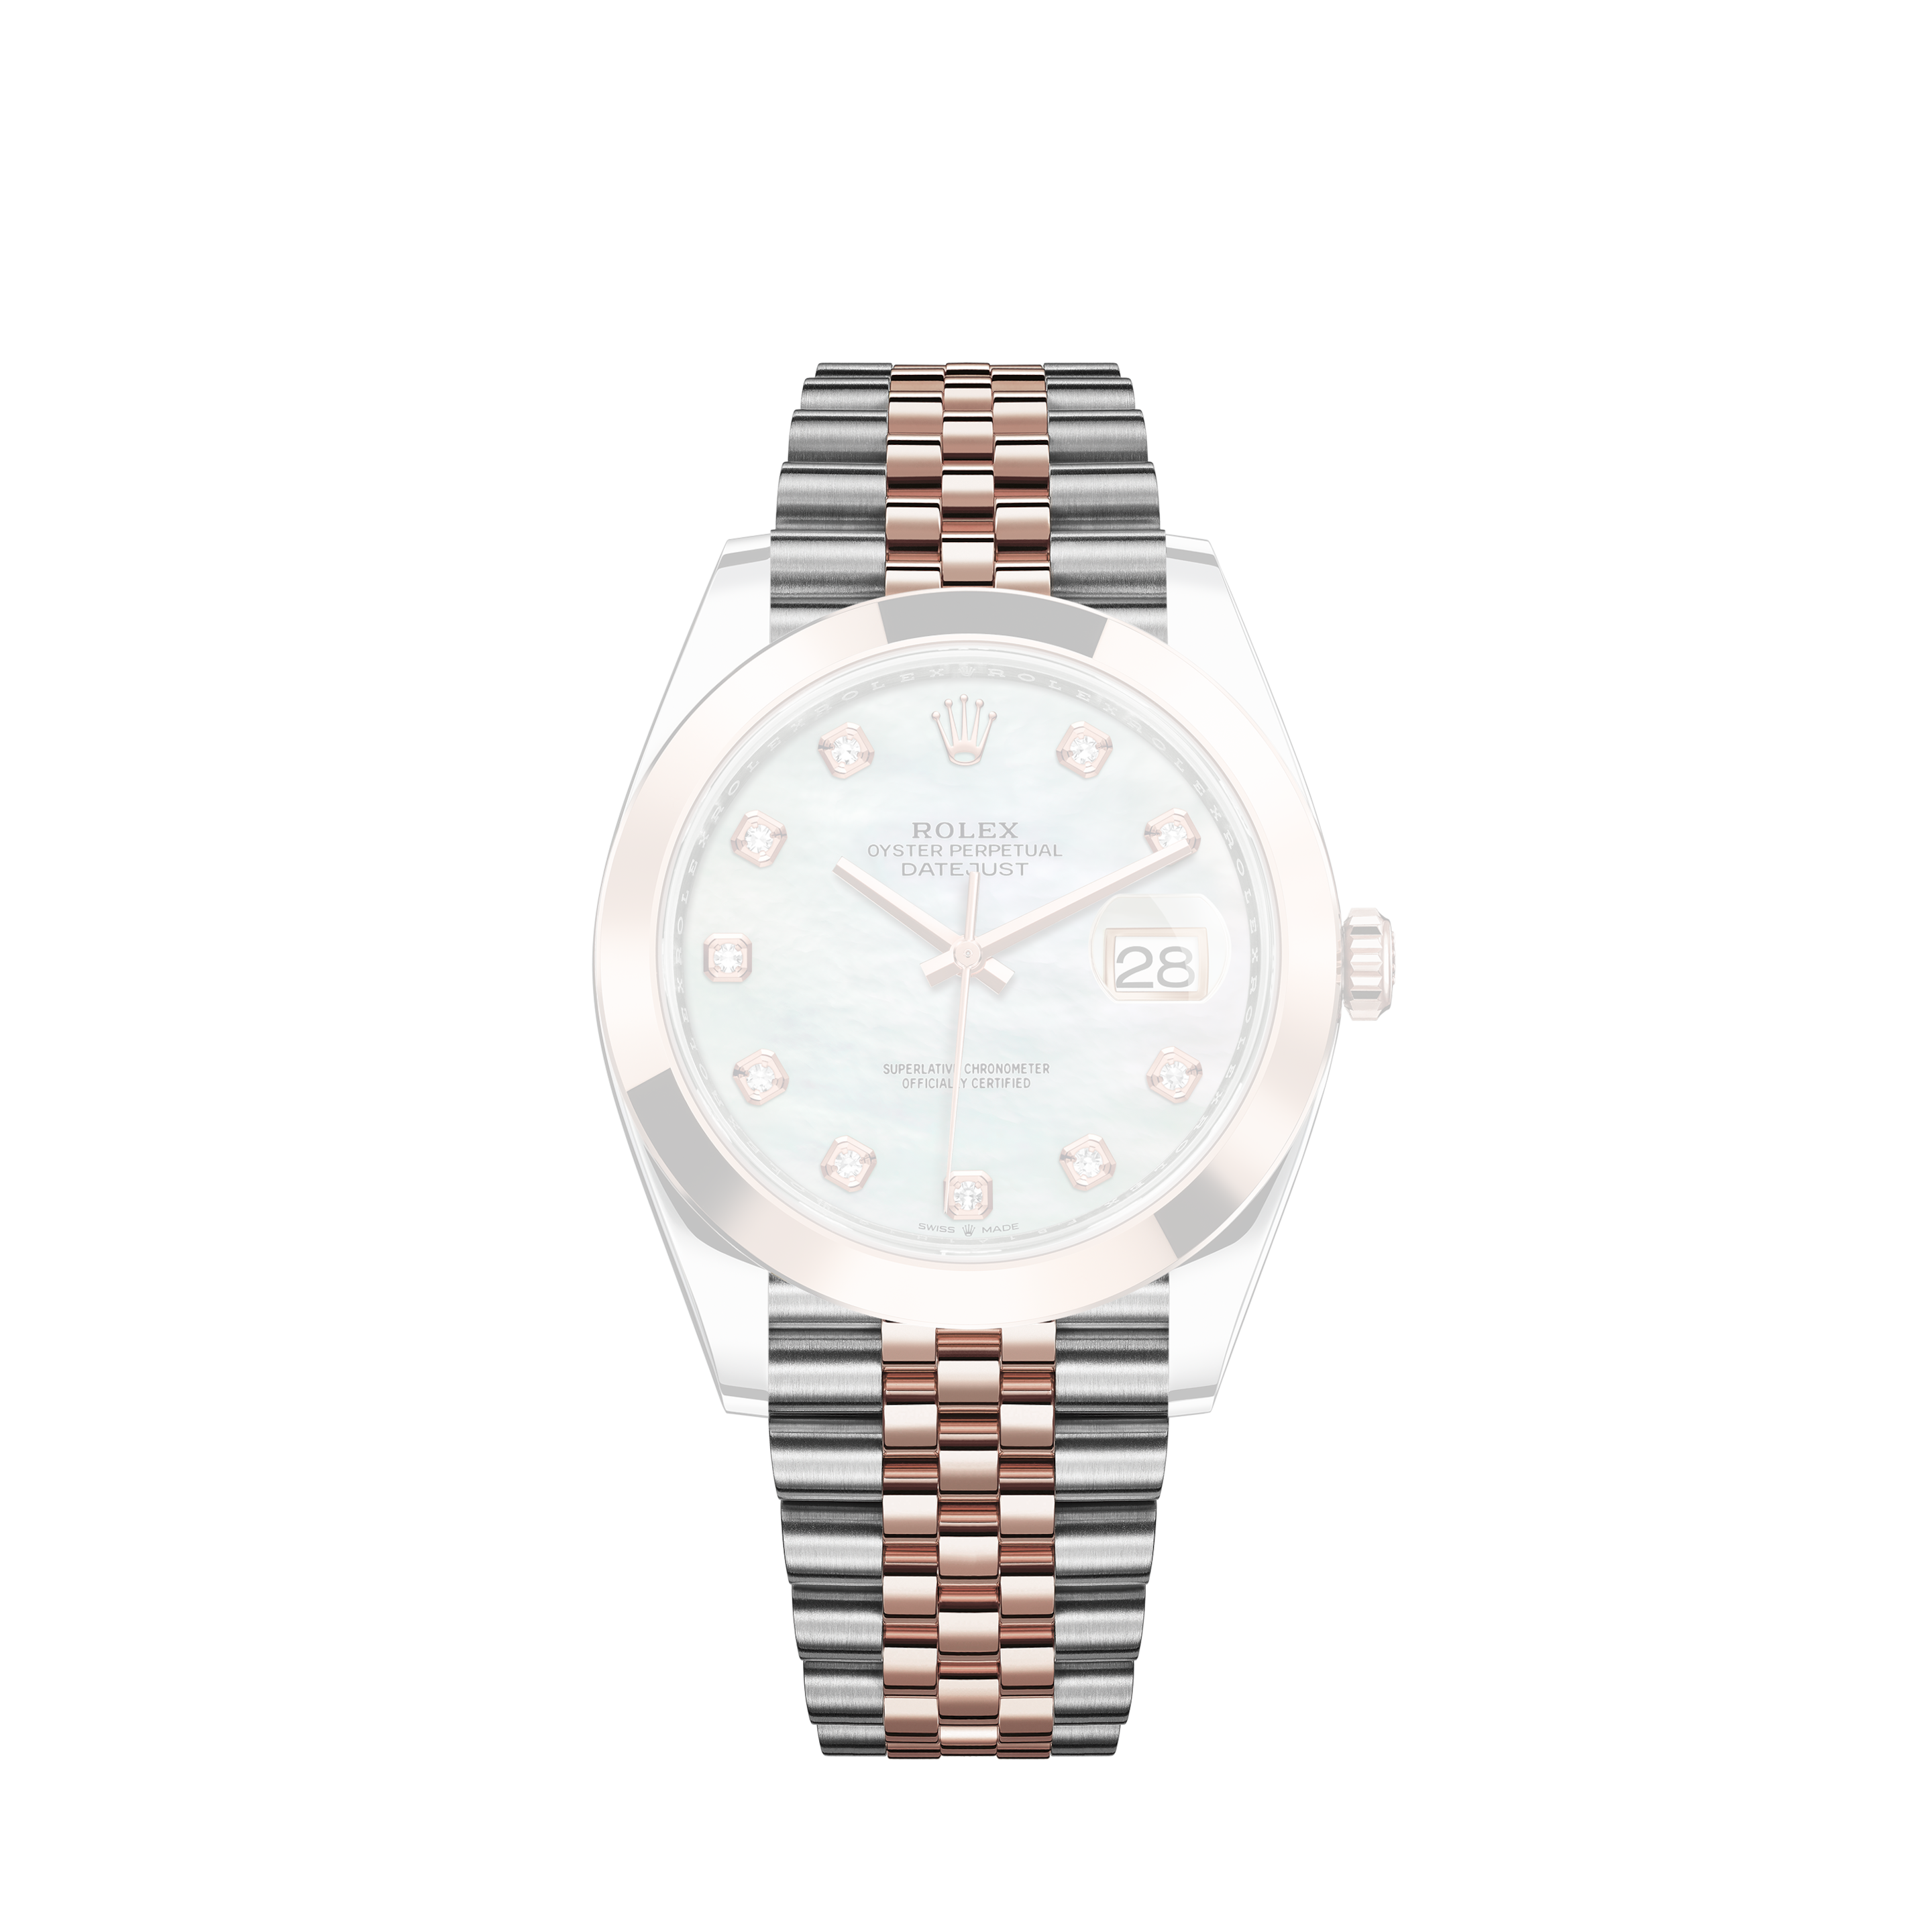 Rolex GMT Master 16700 “Swiss only”